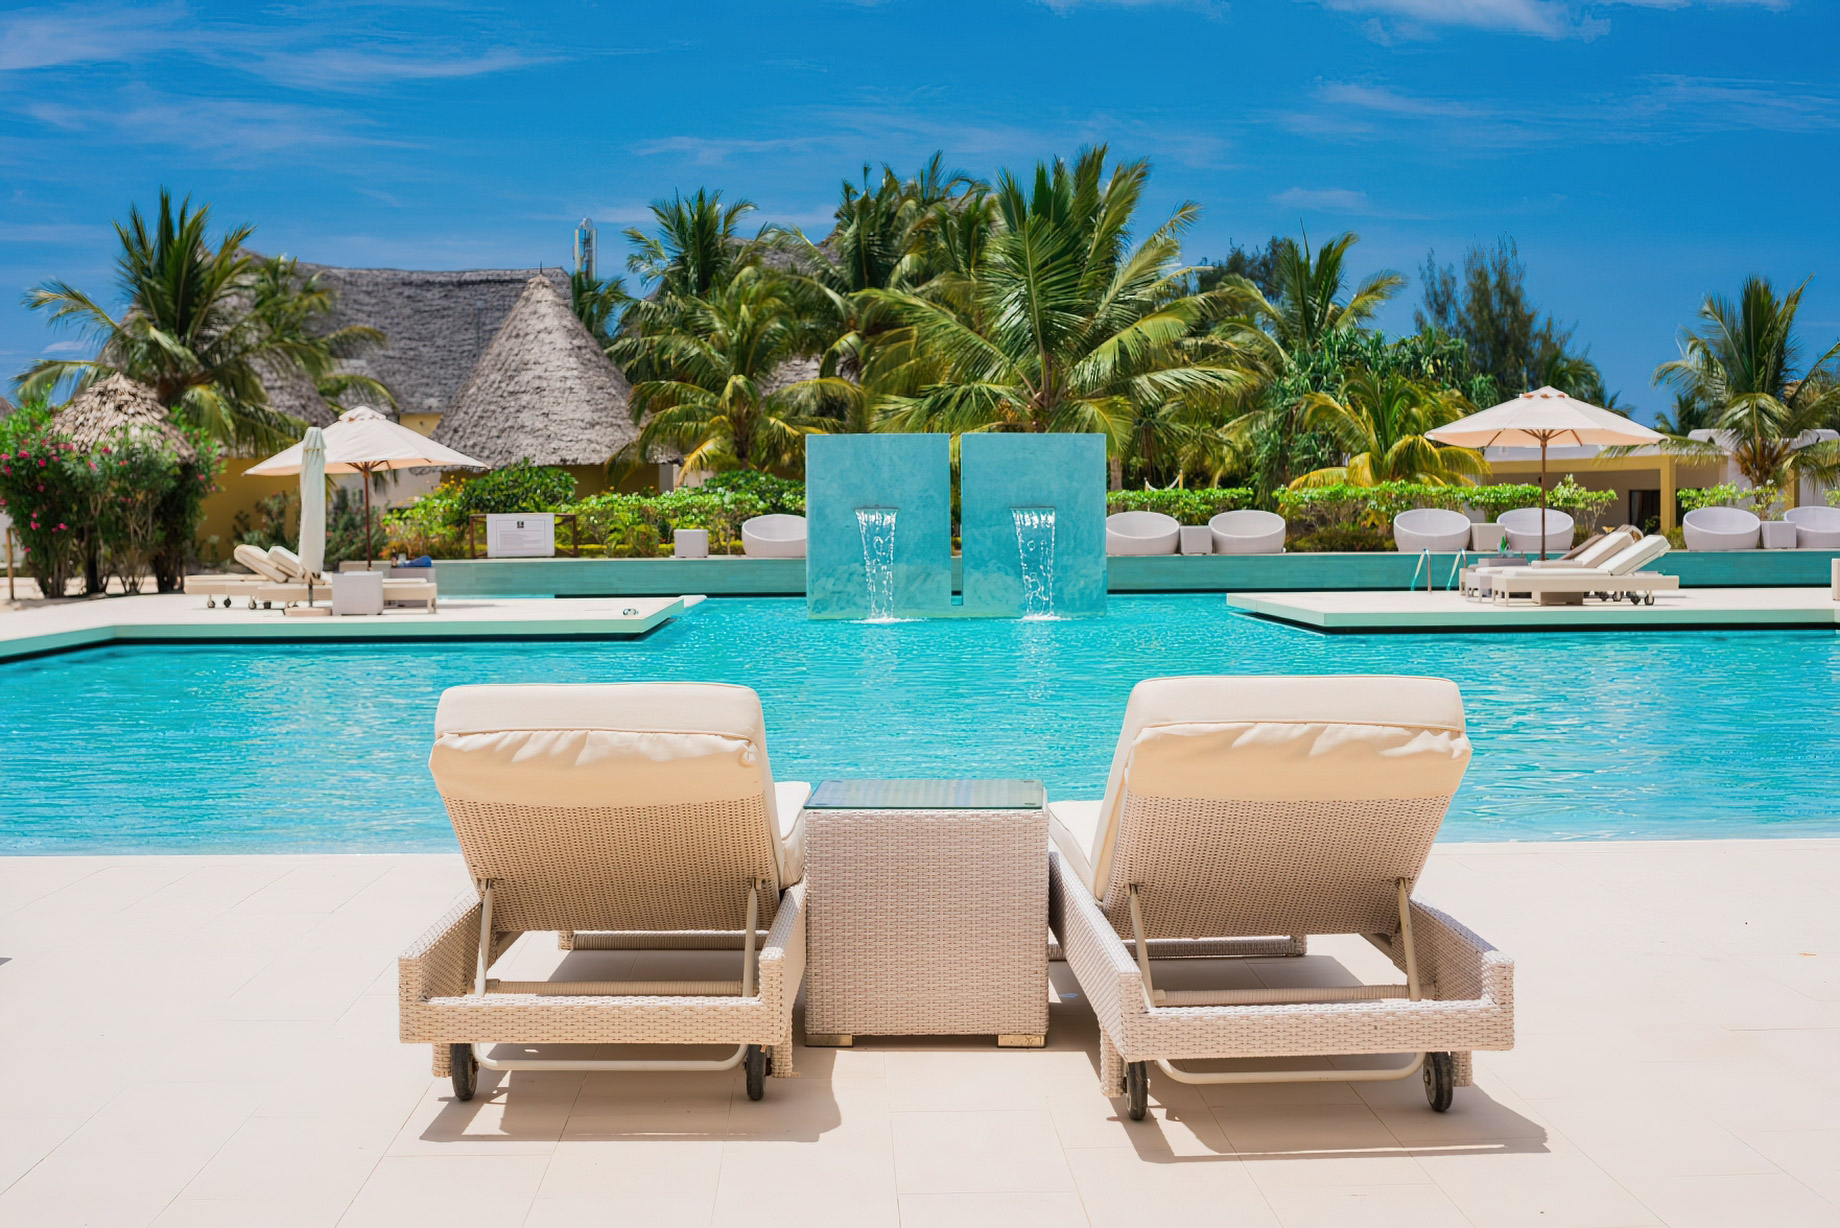 Gold Zanzibar Beach House & Spa Resort – Nungwi, Zanzibar, Tanzania – Pool Deck Chairs